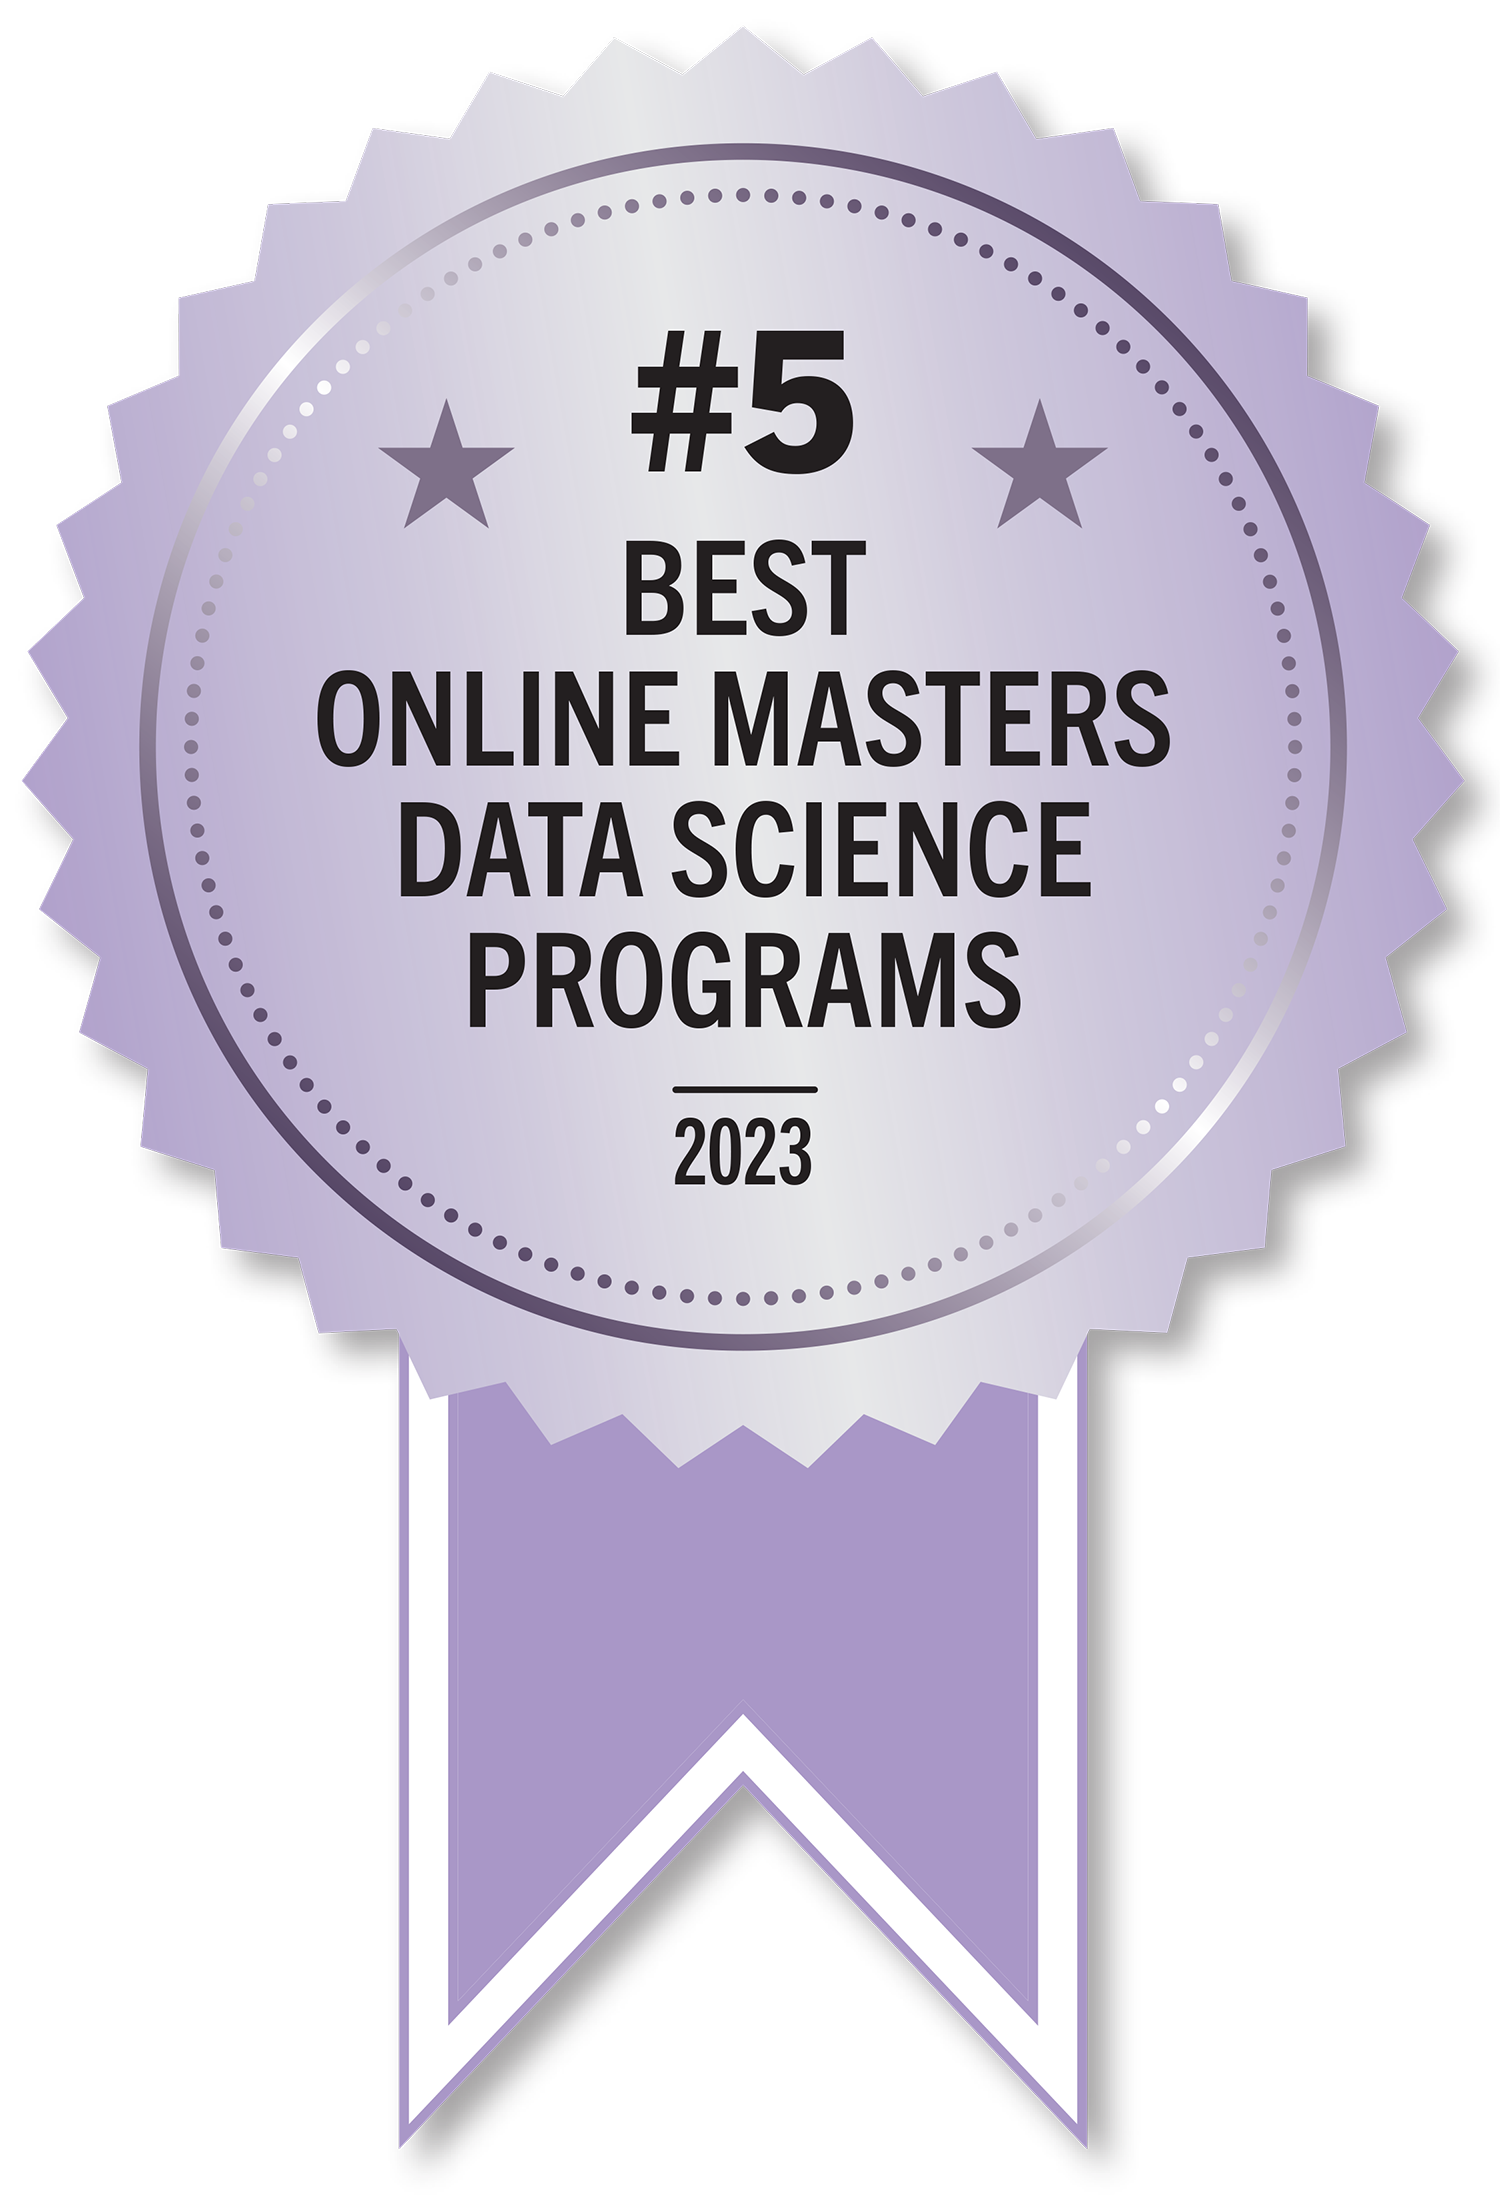 Ribbon art #5 Best Online Masters Data Science Programs 2023.